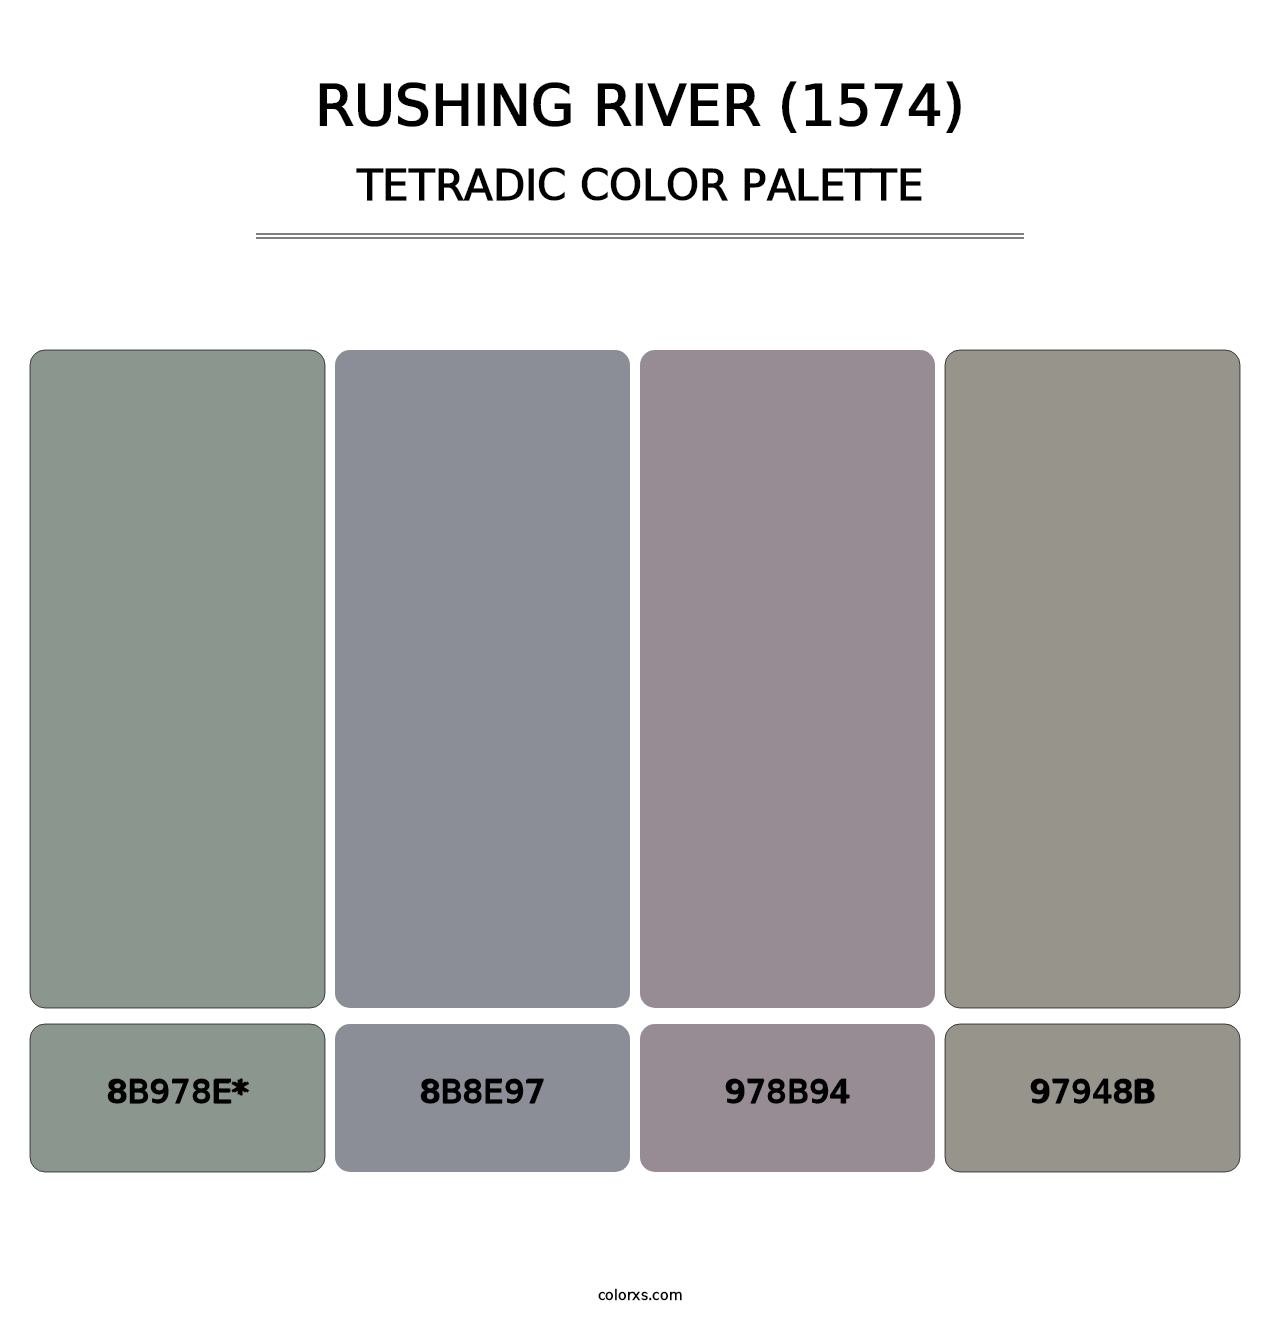 Rushing River (1574) - Tetradic Color Palette